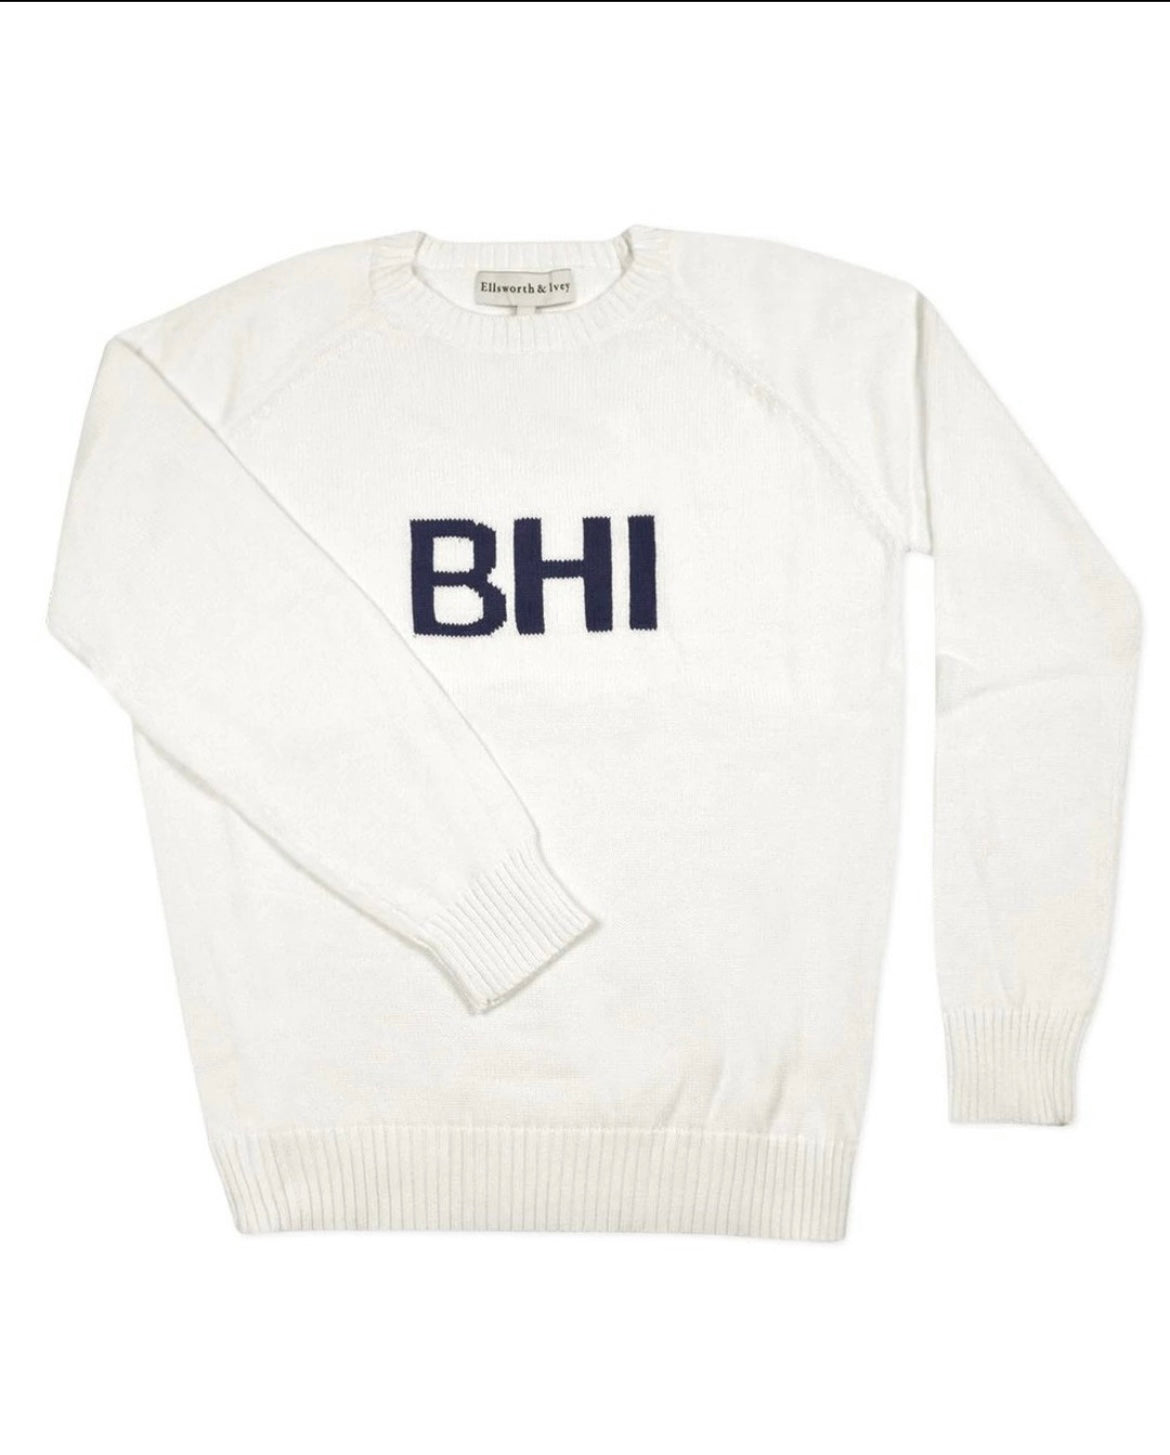 Ellsworth & Ivey Women’s BHI Sweater - Block Letters - BHI